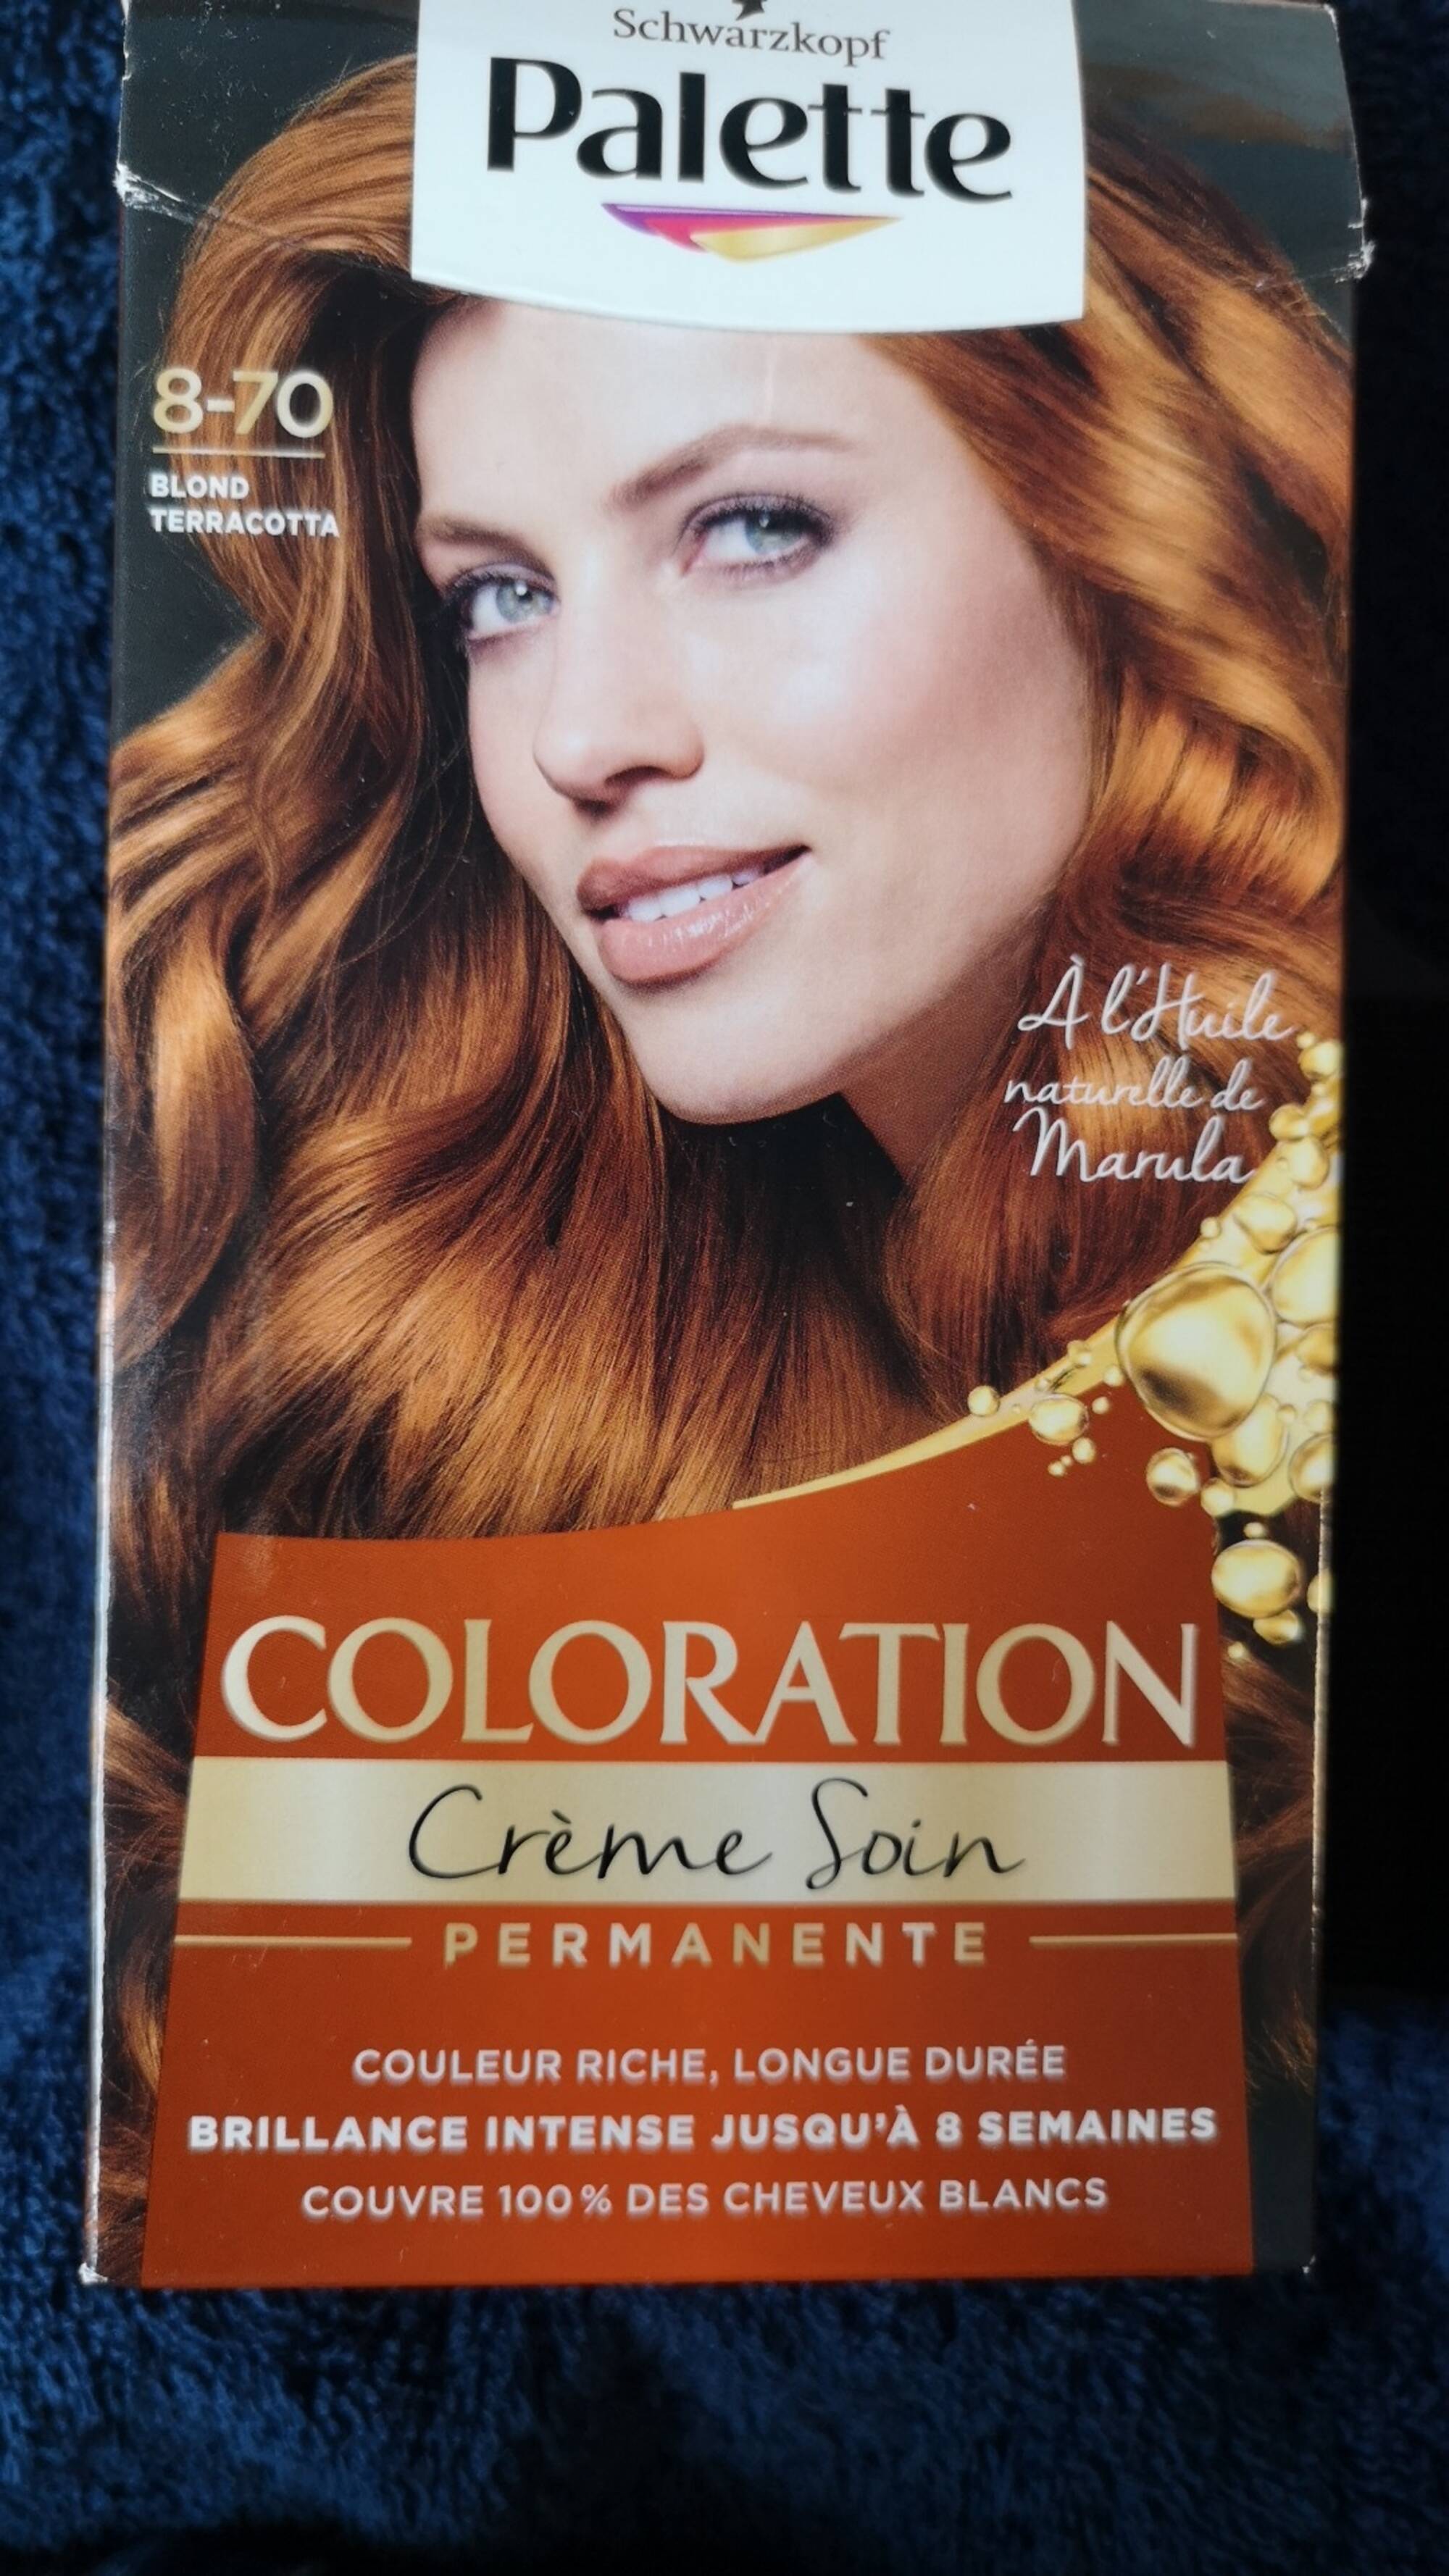 SCHWARZKOPF - Coloration crème soin permanente 8-70 blond terracotta